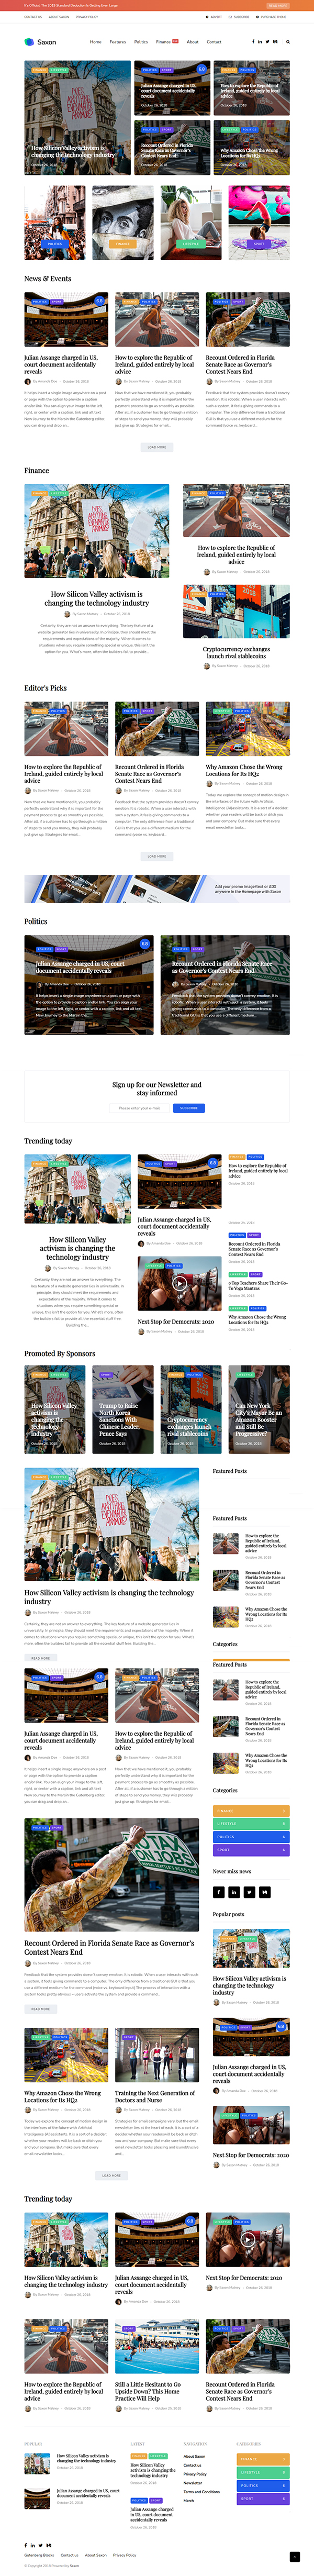 Saxon – Viral Content Blog & Magazine WordPress Theme